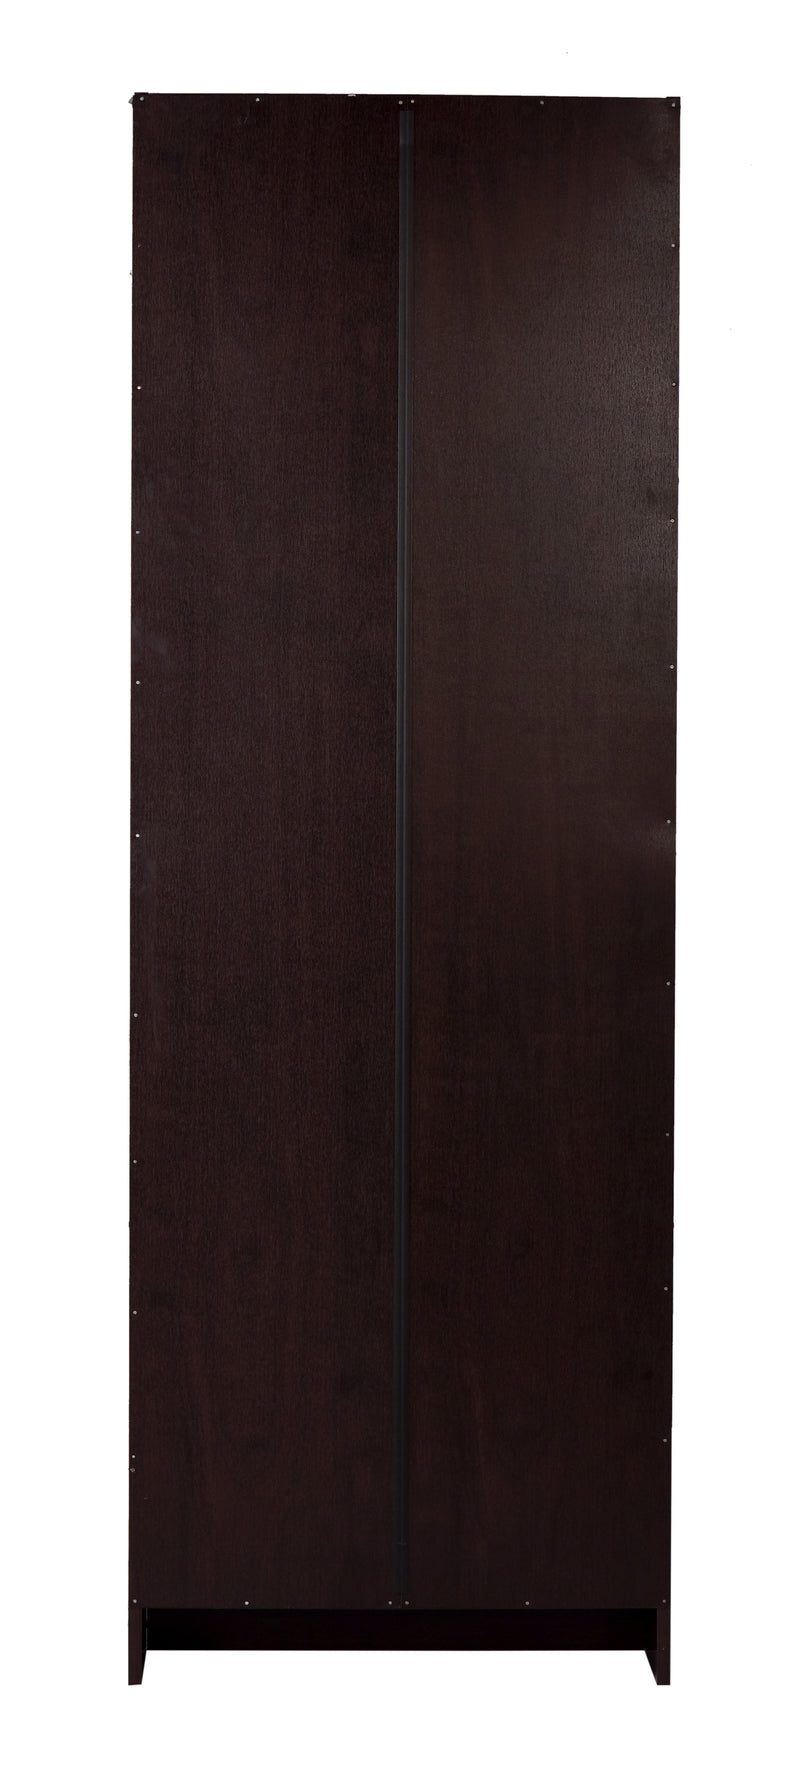 DeckUp Meritus-S Engineered Wood Book Shelf / Display and Storage Unit (Dark Wenge, Matte Finish)